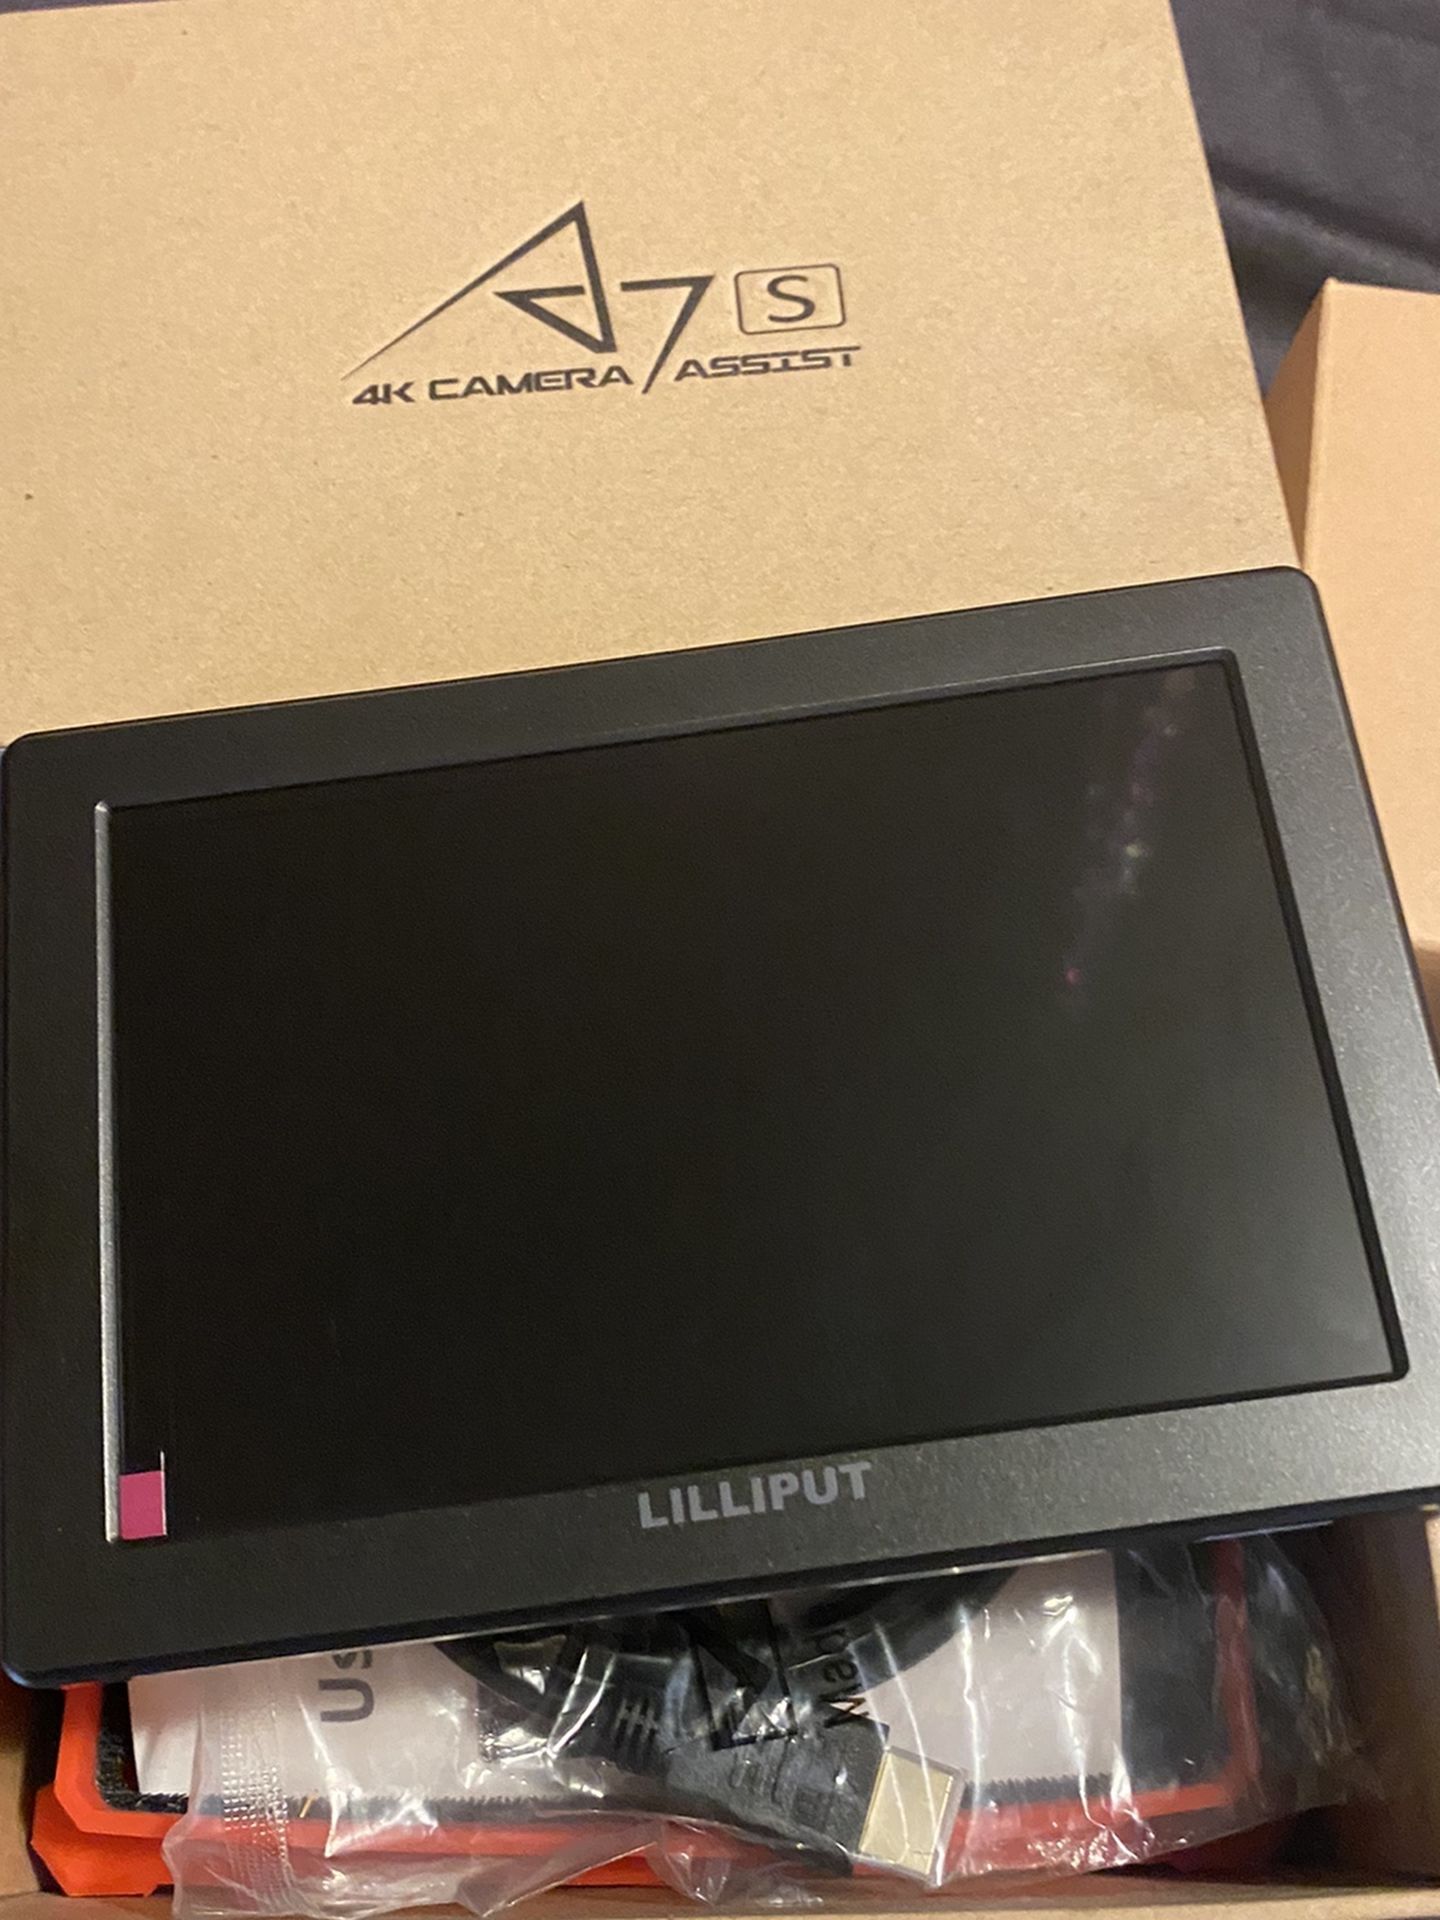 Lilliput A7S 4K camera Assist Monitor